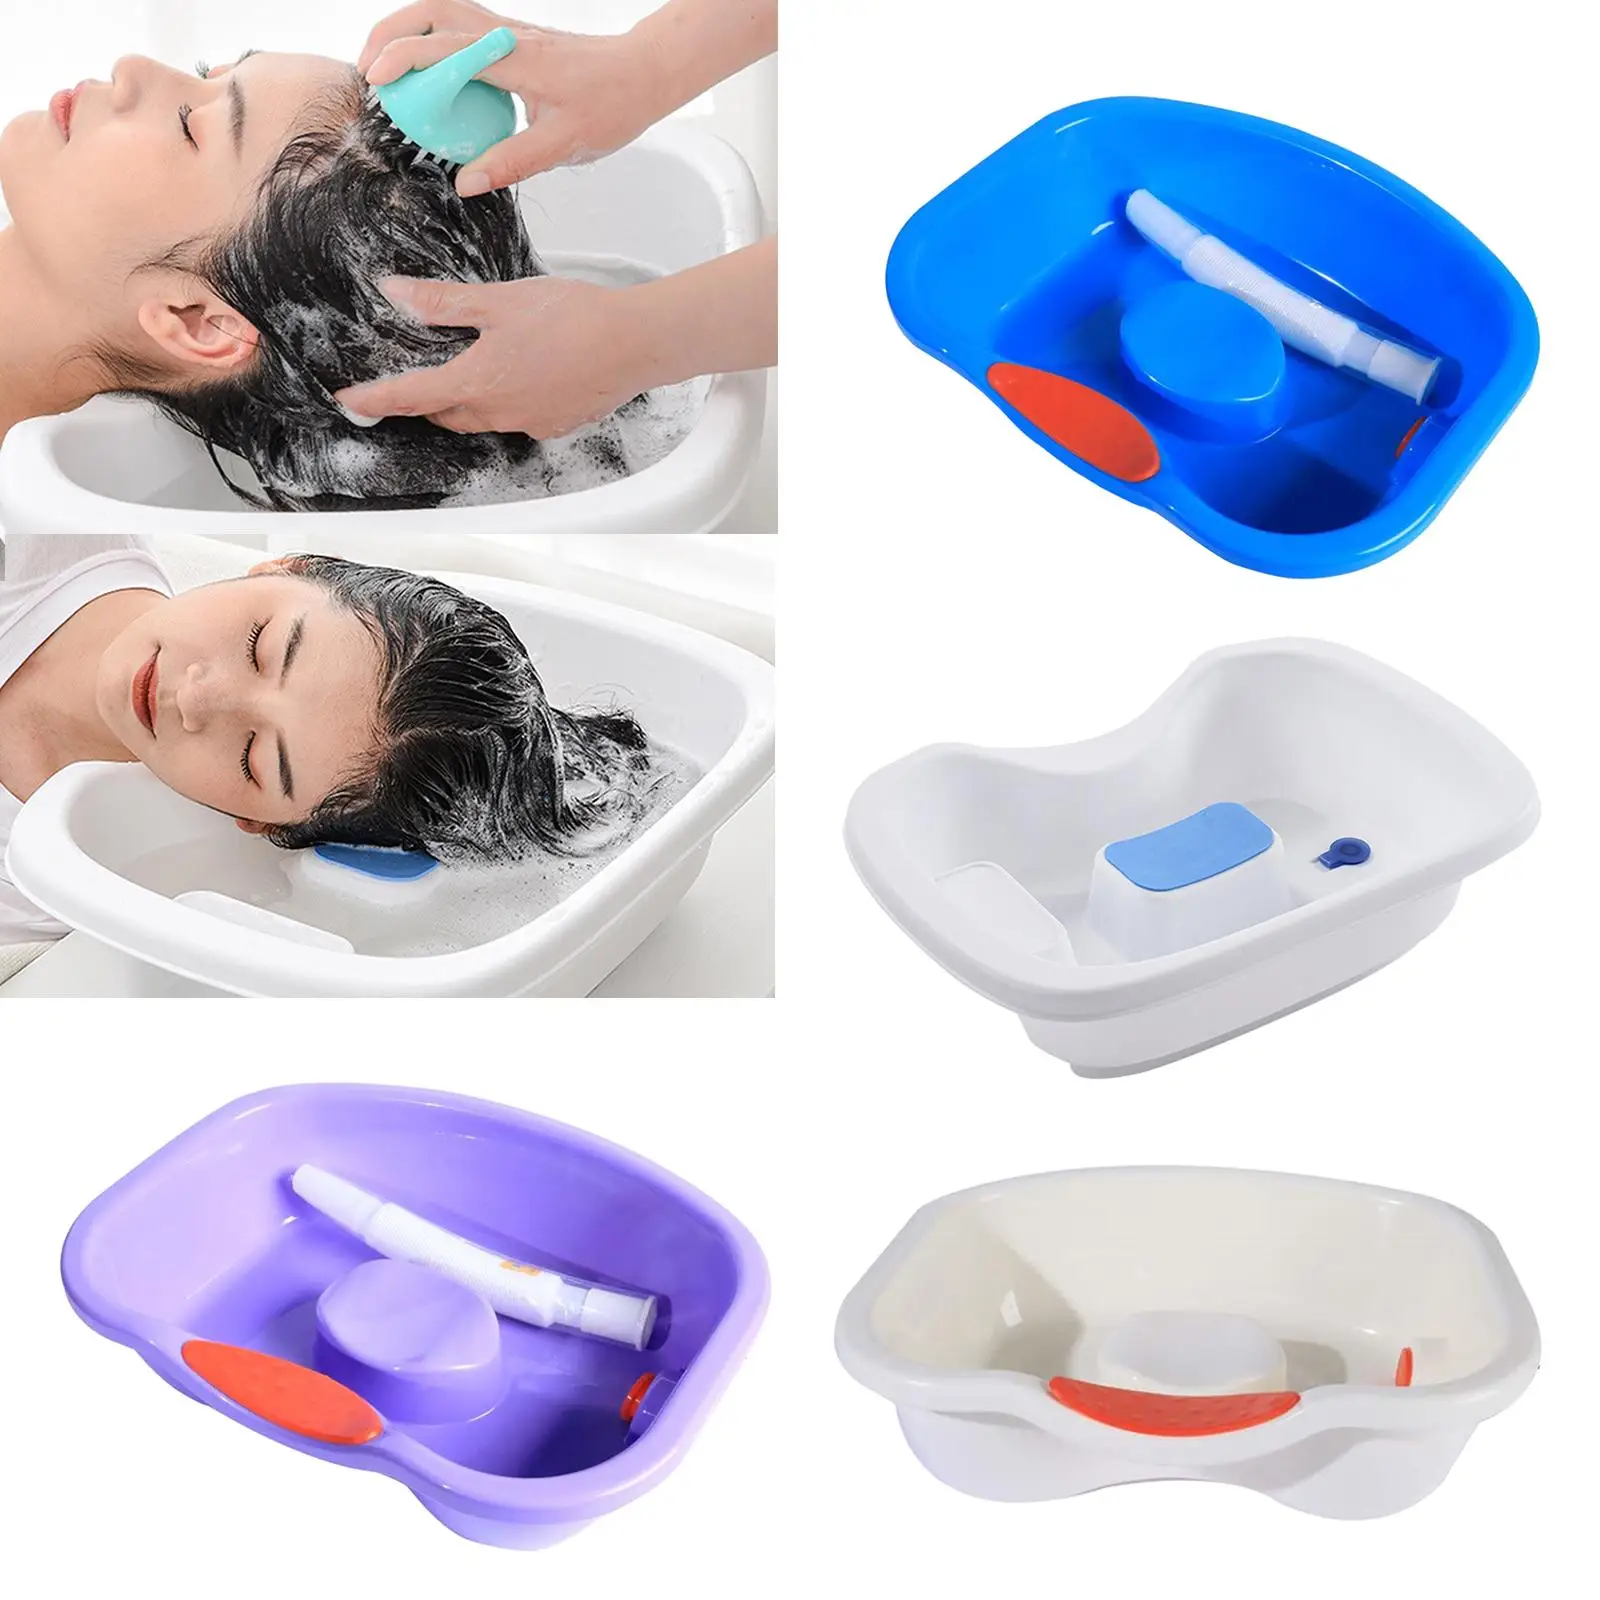 Easy Bed Shampoo Basin Hair Washing Basin Wash Tray with Drain Hose